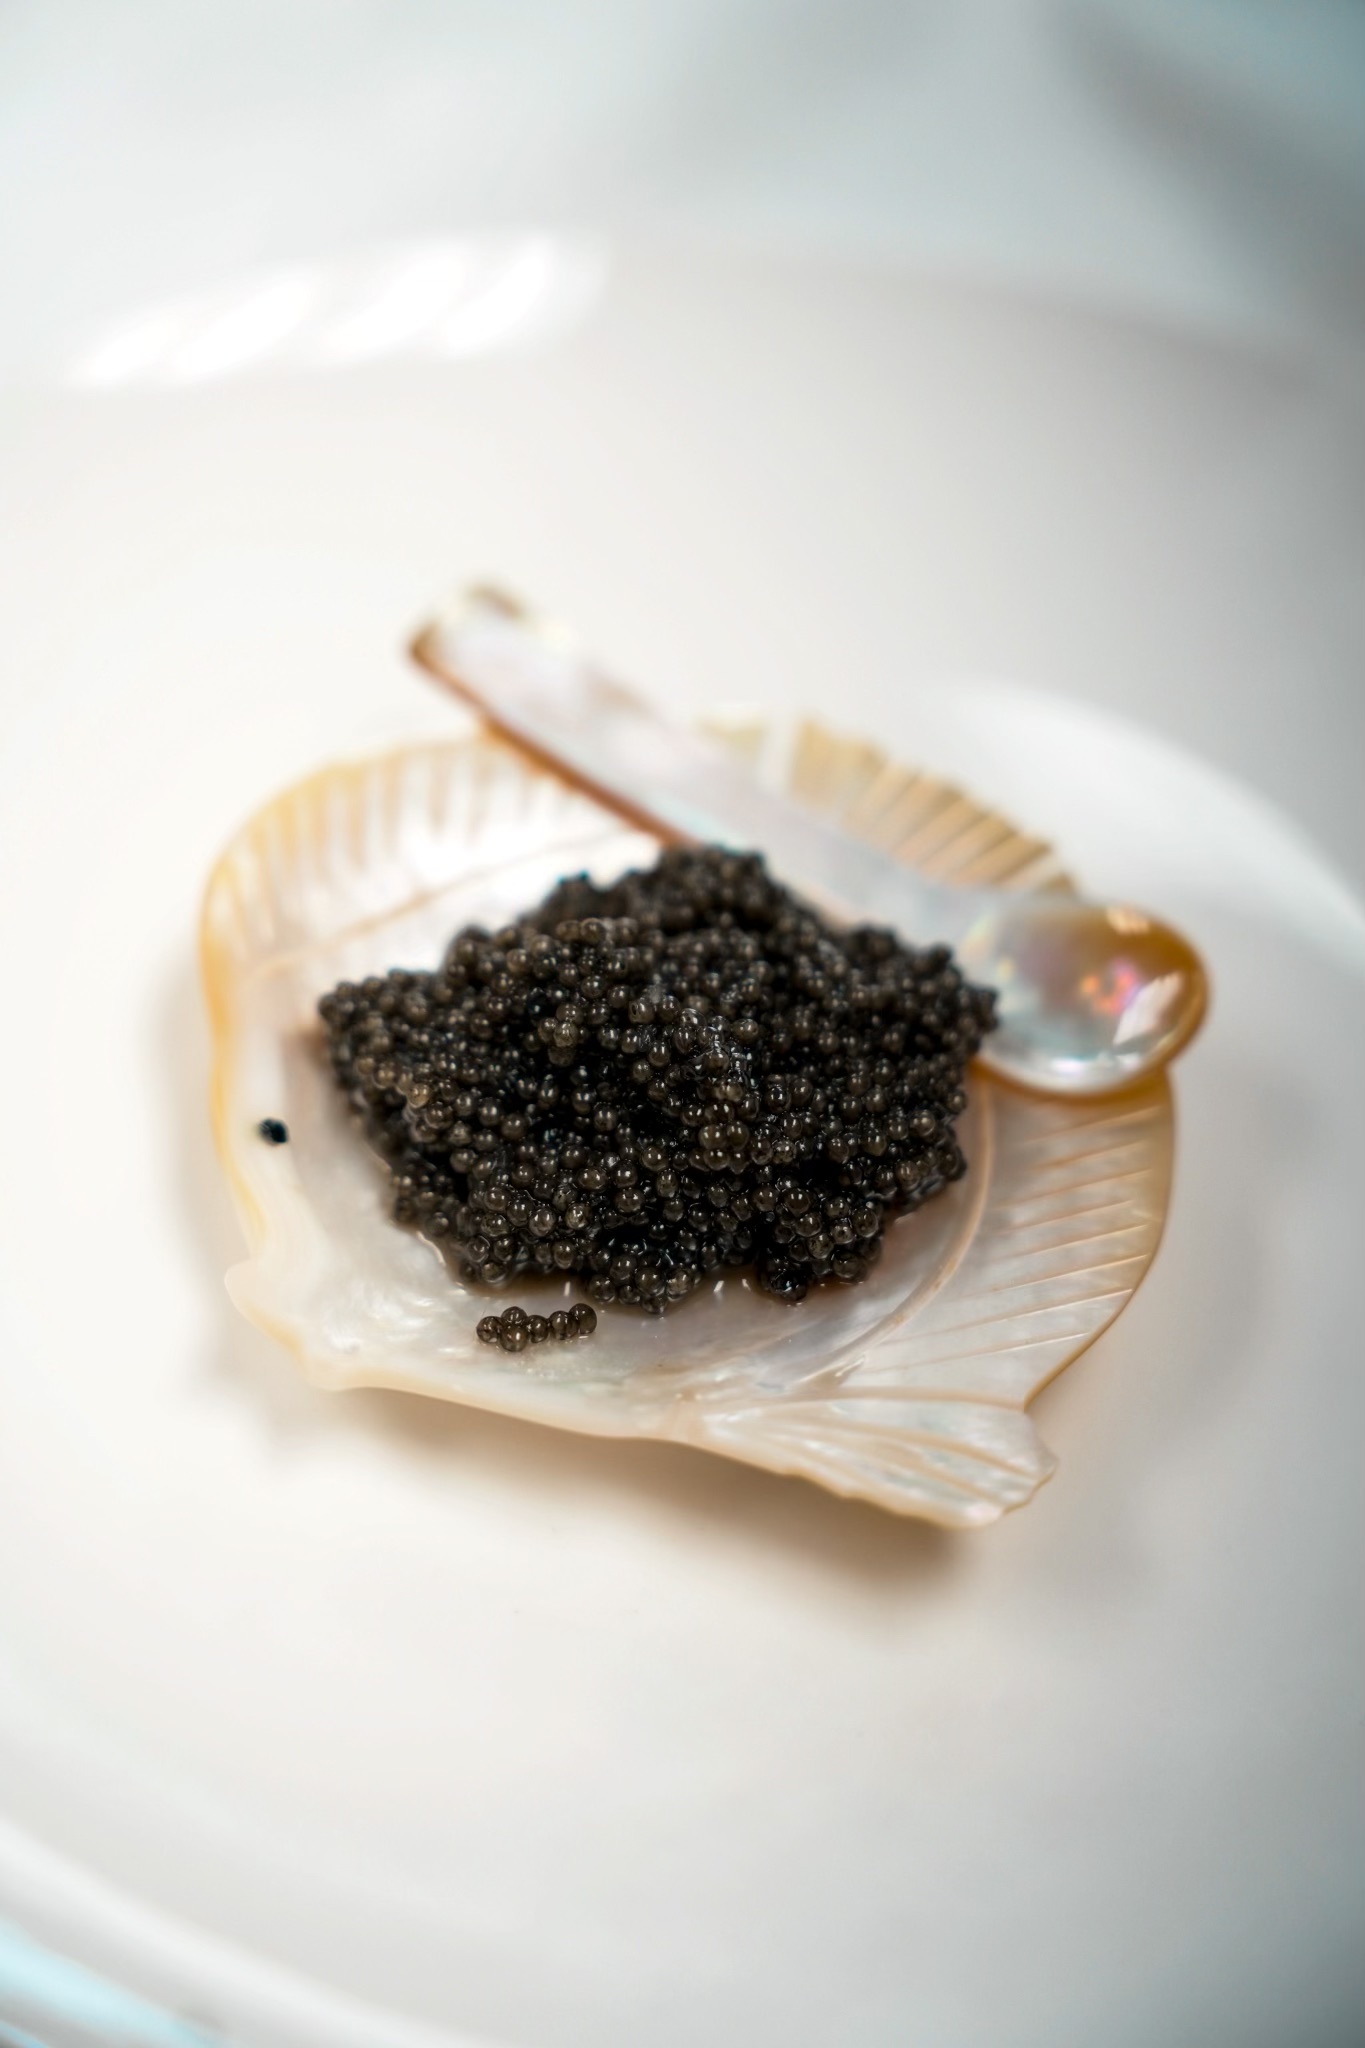 Buy Fresh Paddlefish Caviar Online from North American Caviar